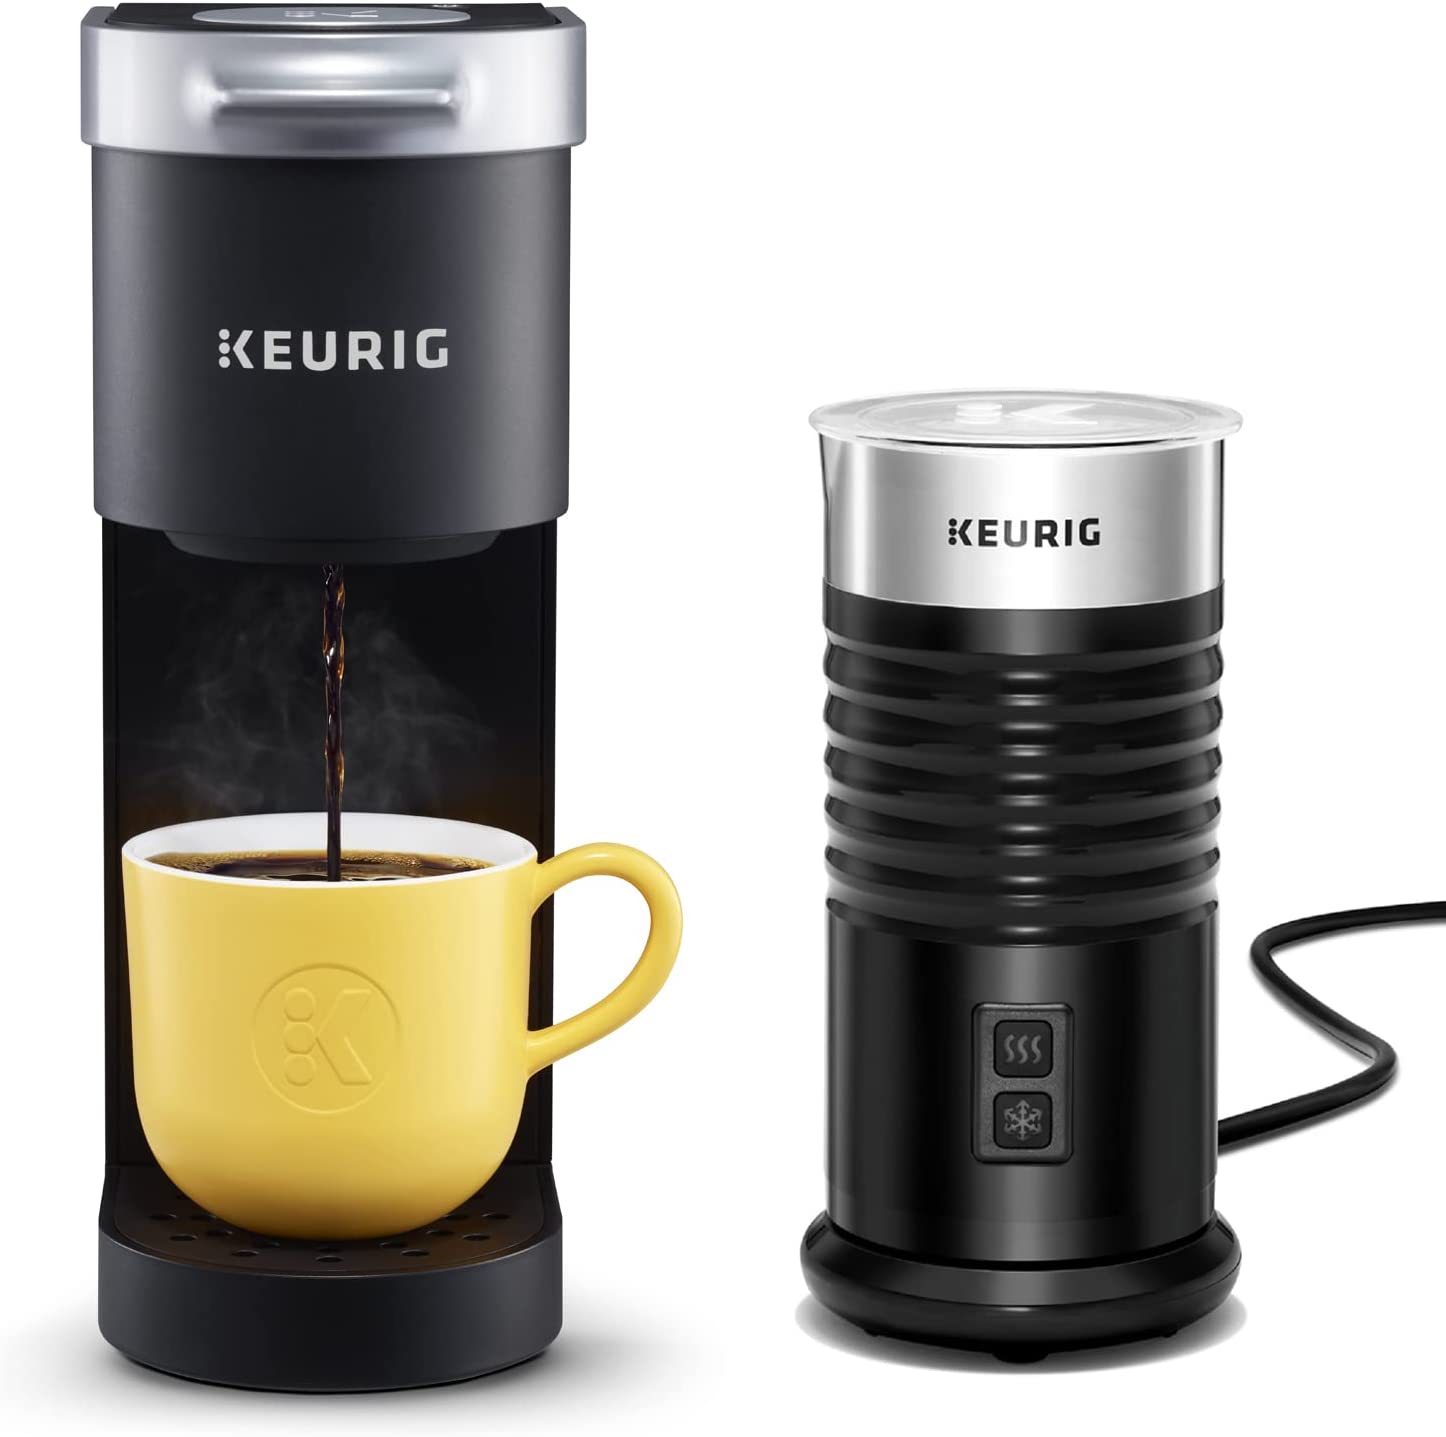 Keurig K-Mini Coffee Maker, Single Serve, Black